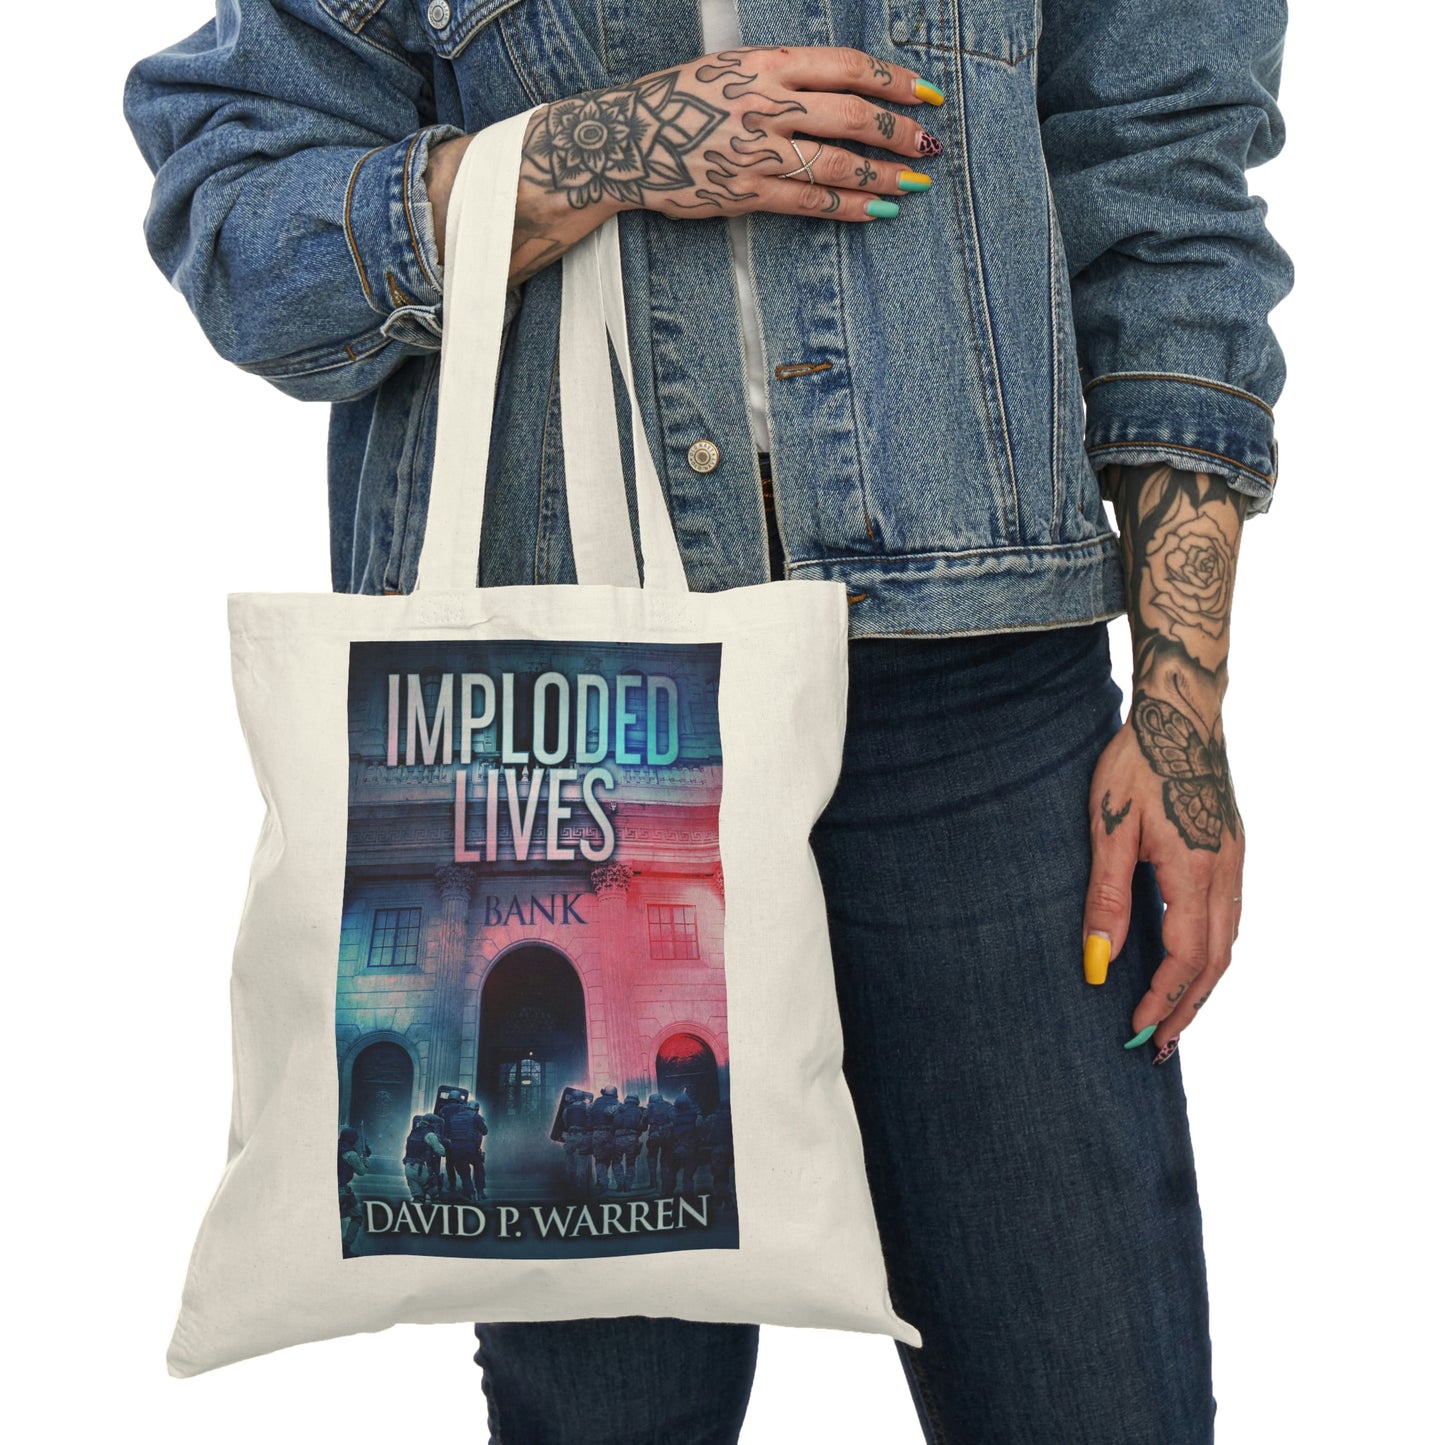 Imploded Lives - Natural Tote Bag